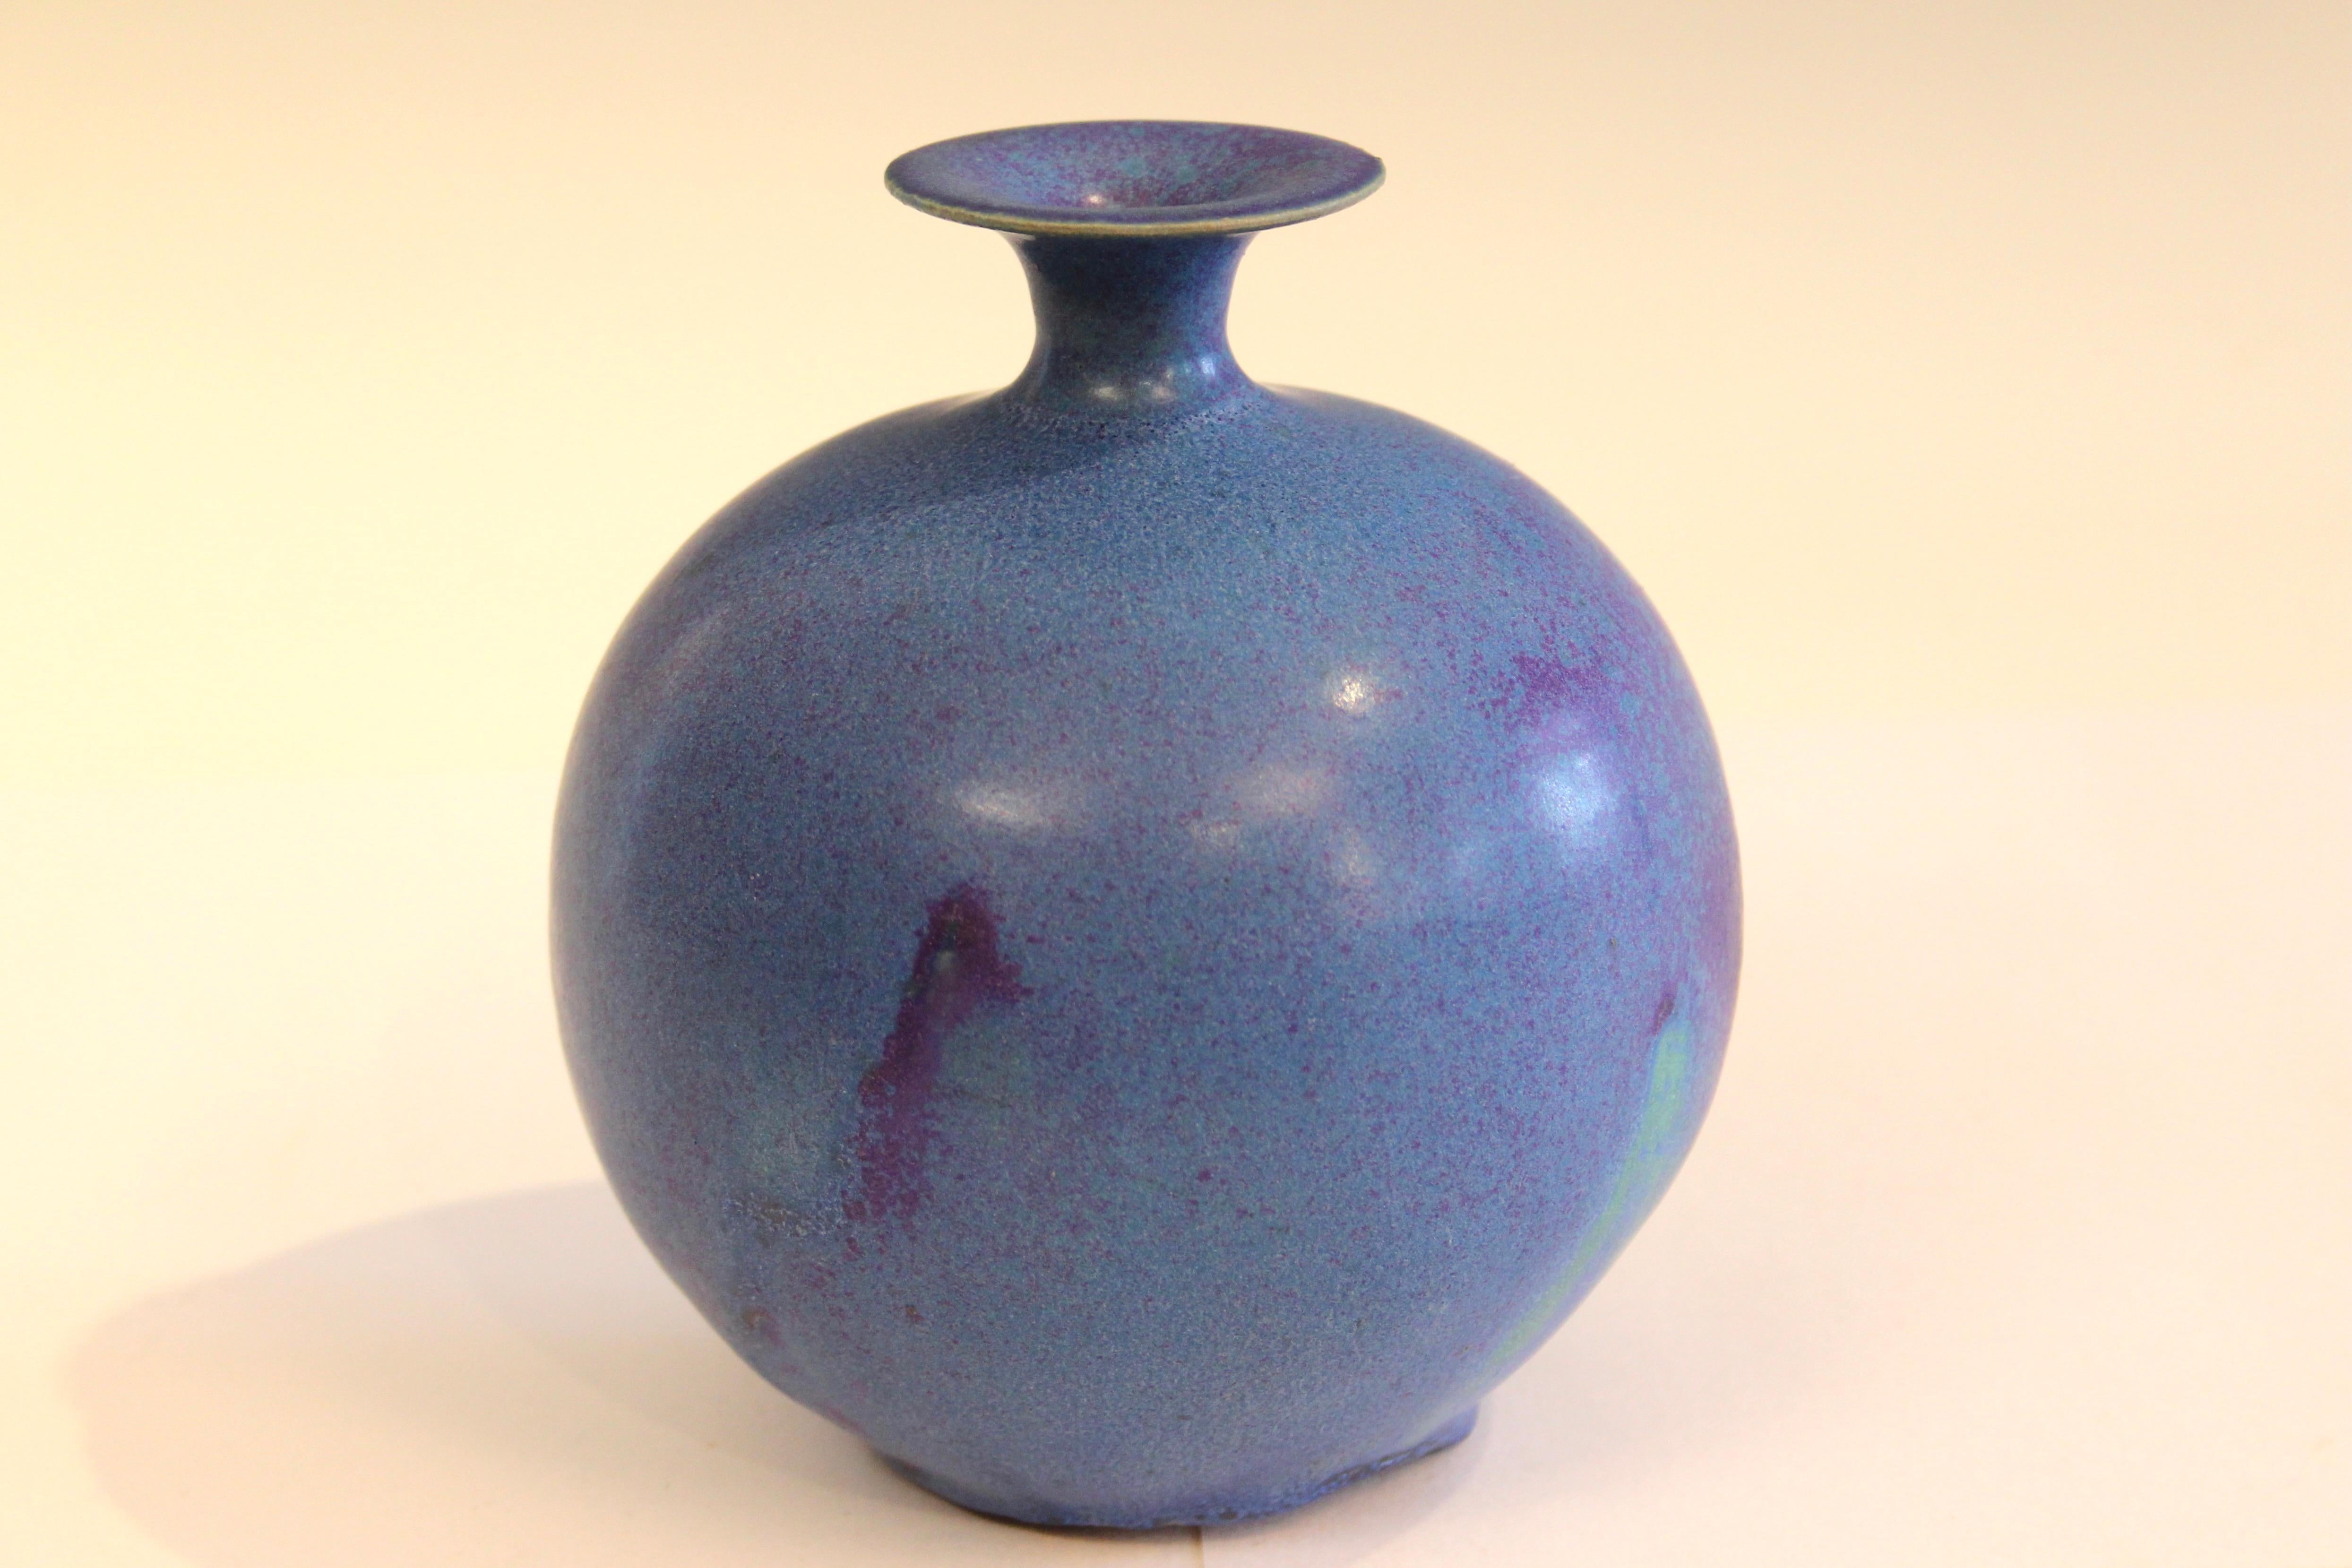 Vintage Henry Gernhardt studio pottery vase in spherical form with little trumpet mouth and terrific blue and purple velvety mottled matt glaze. Impressed cipher on base. 5 3/4